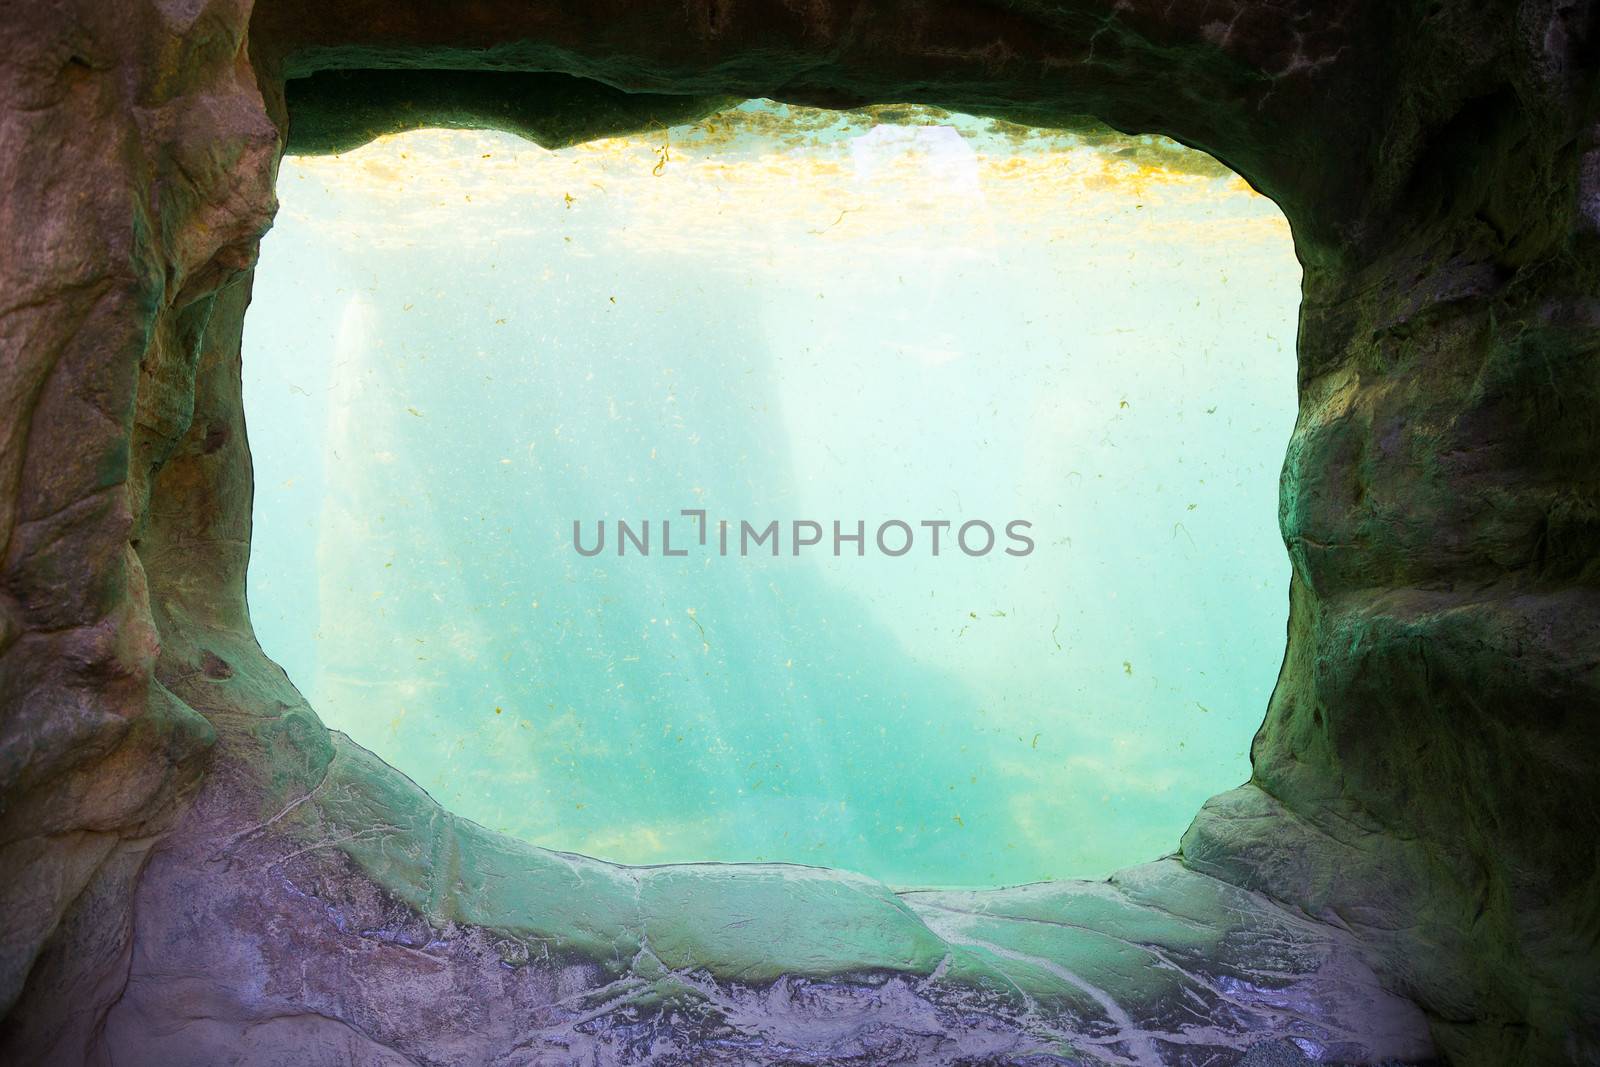 Underwater Aquarium Tank by joshuaraineyphotography